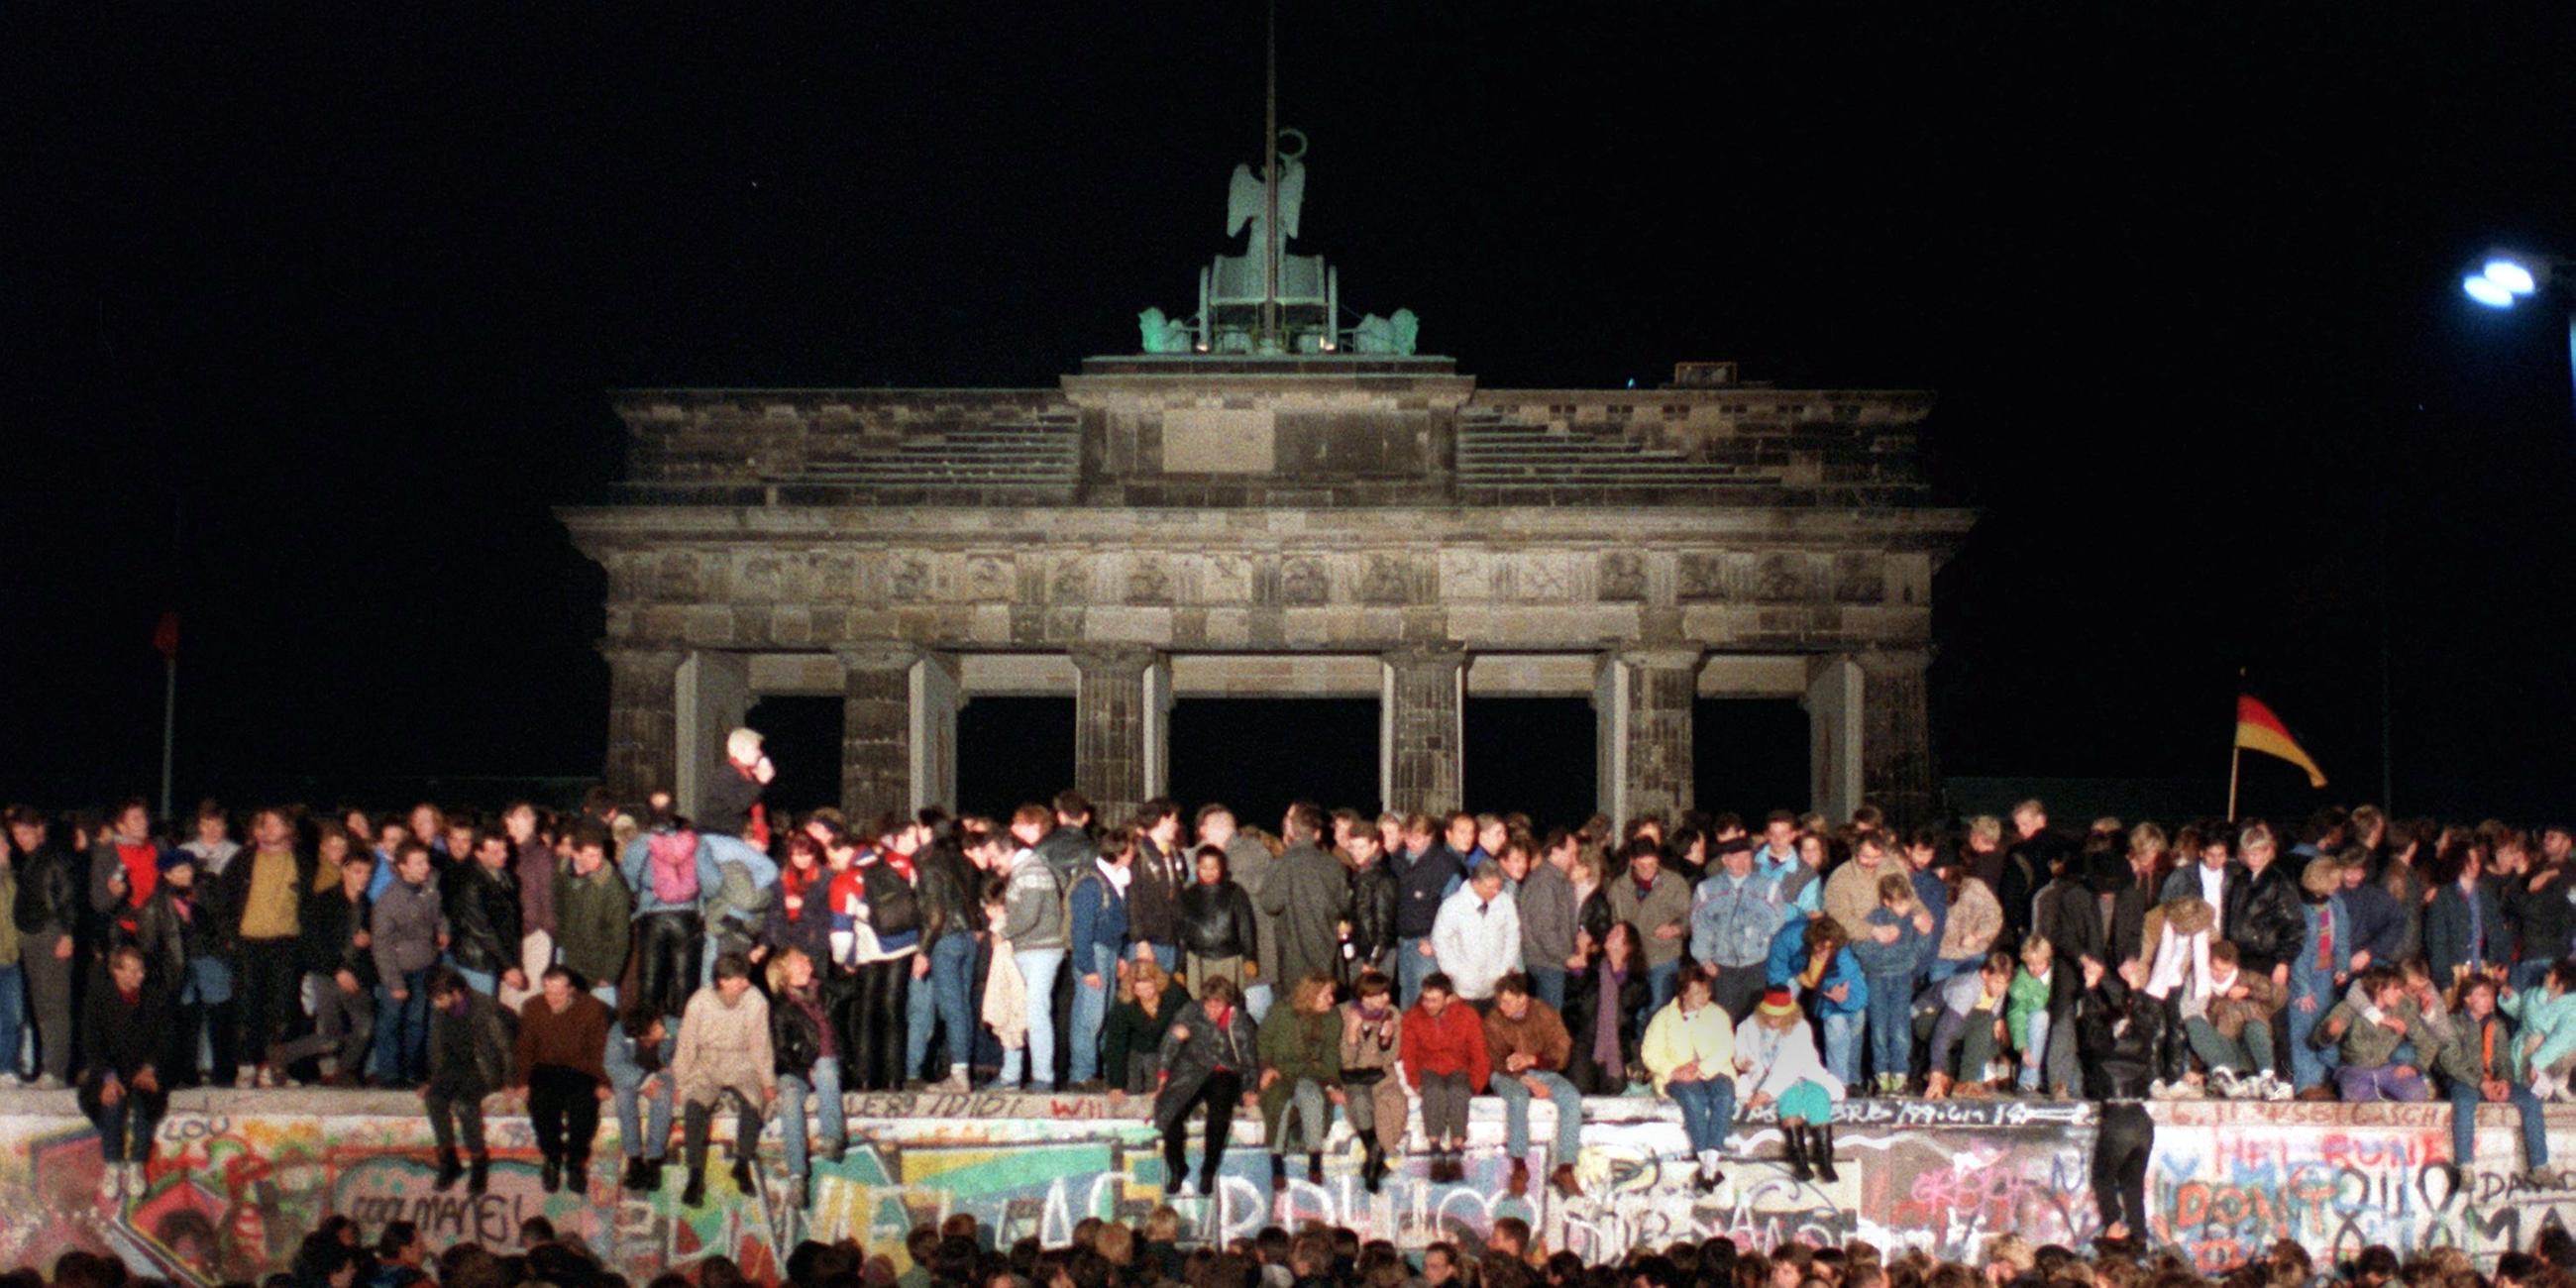 Menschen feiern den Mauerfall vor dem Brandenburger Tor in Berlin 1989